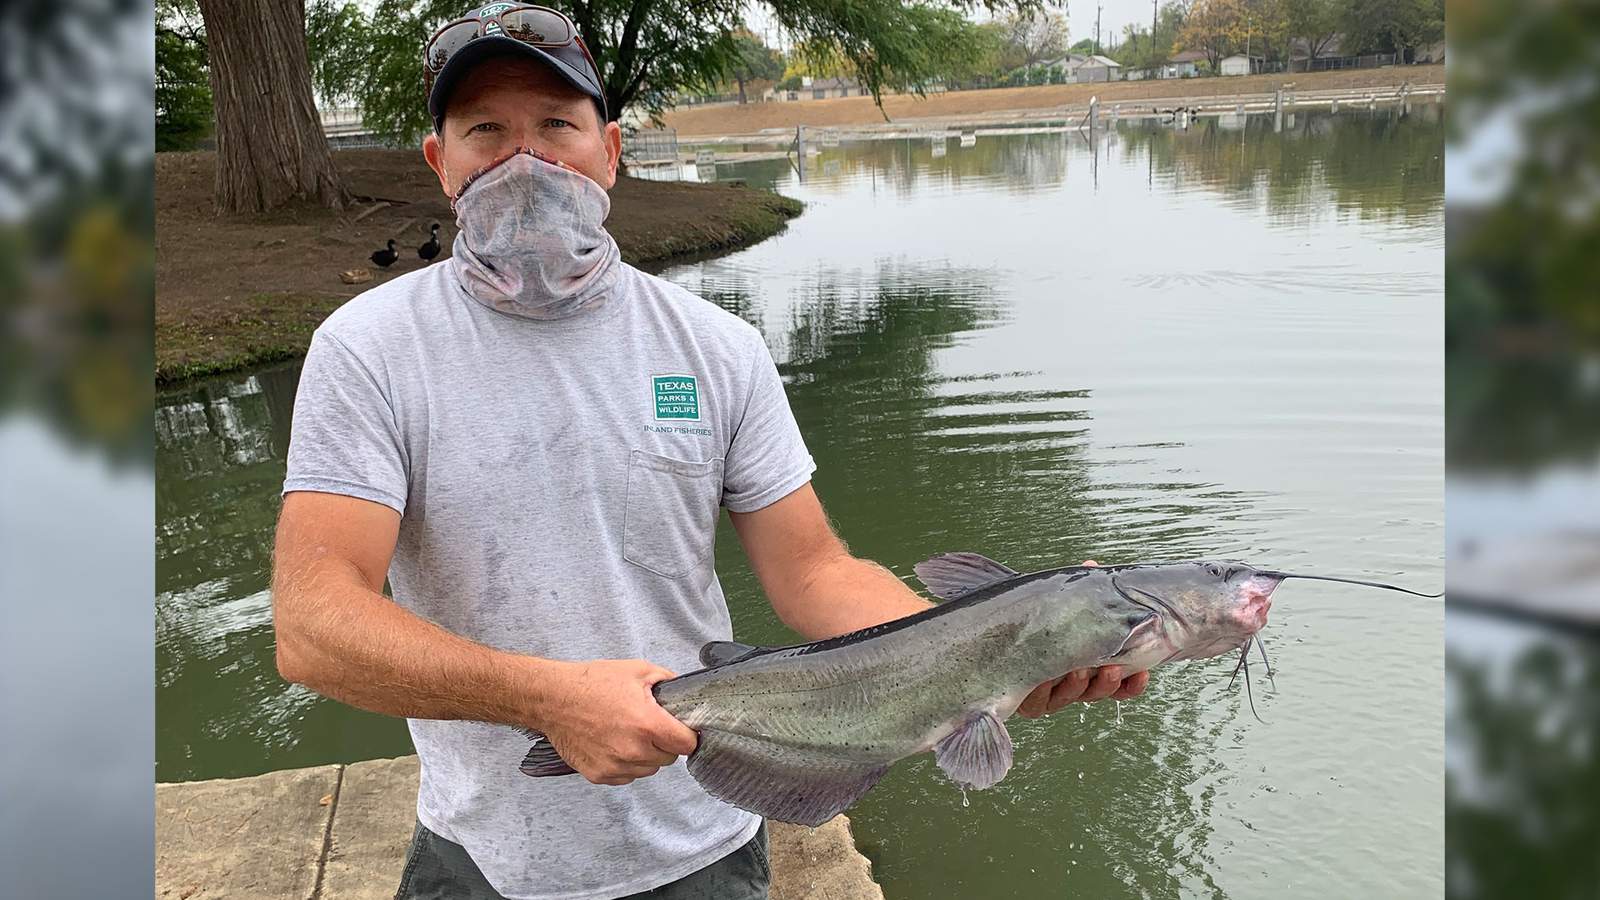 San Antonio lake stocked with 50 trophy catfish